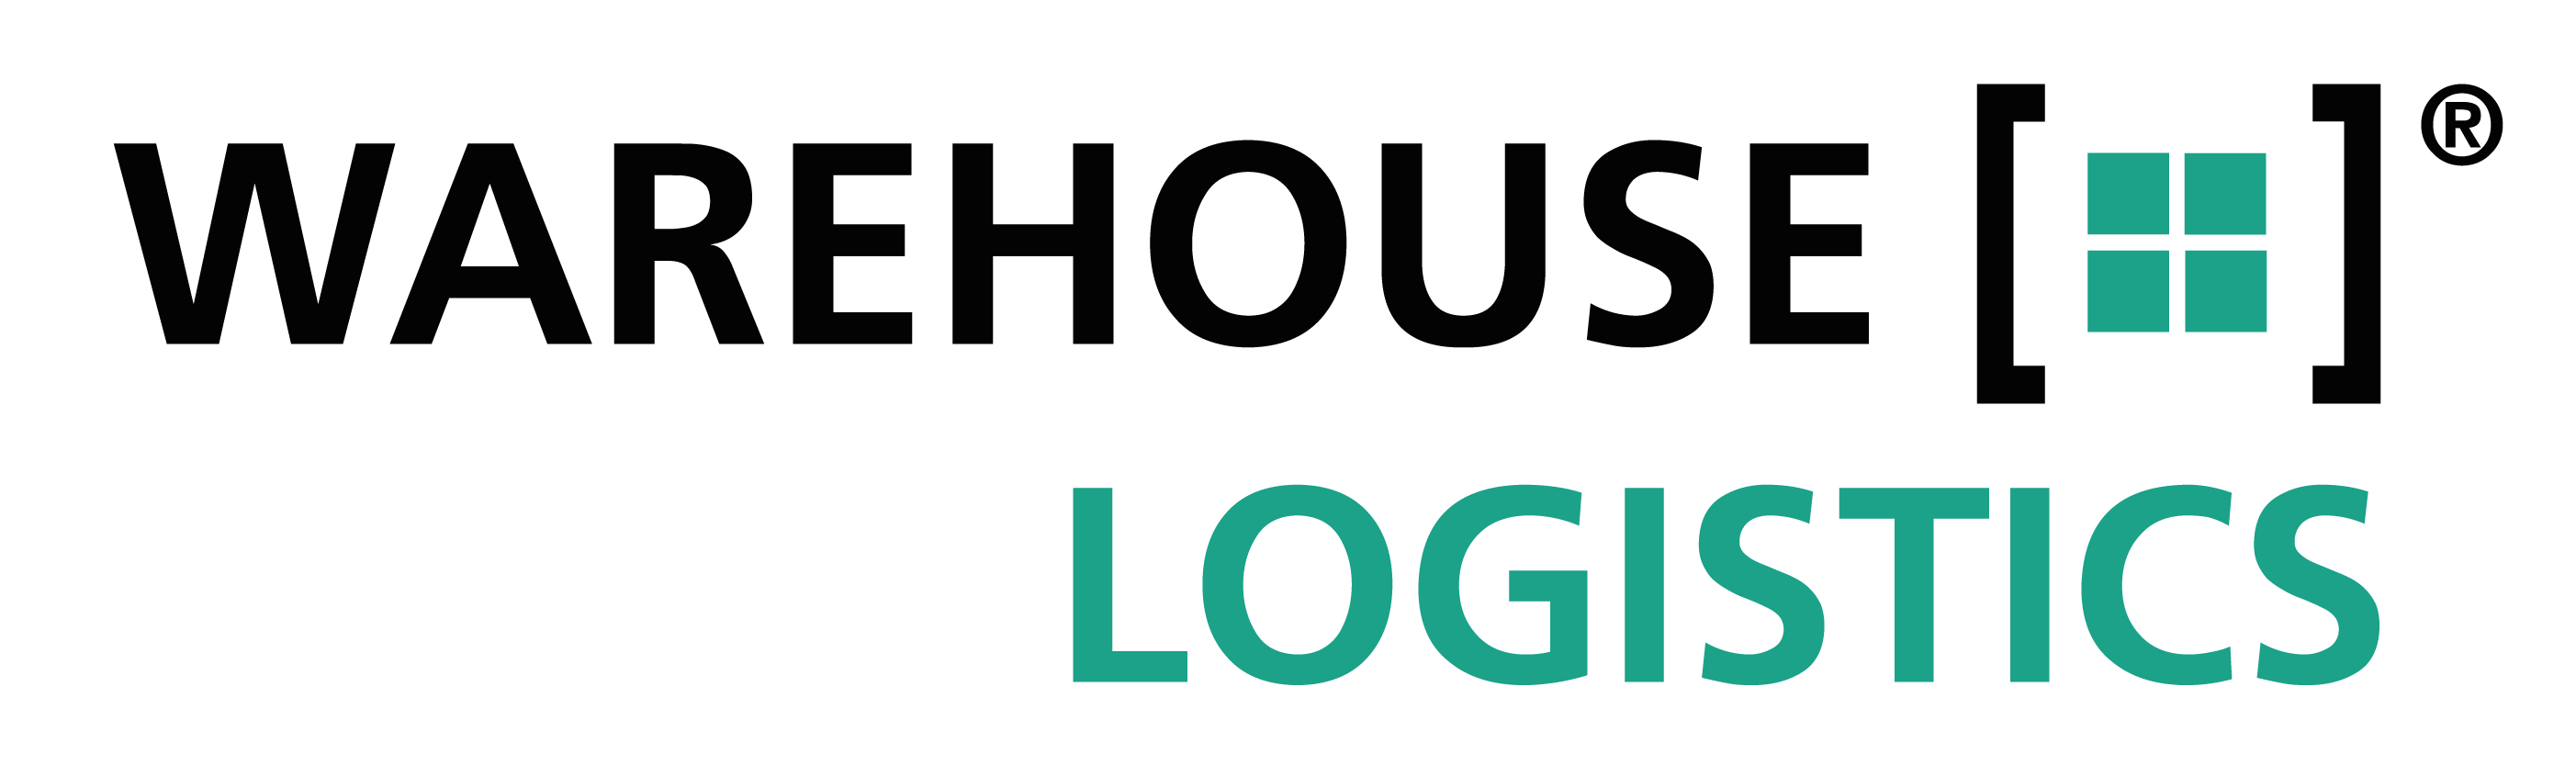 warehouse-logistics: Deelnemers